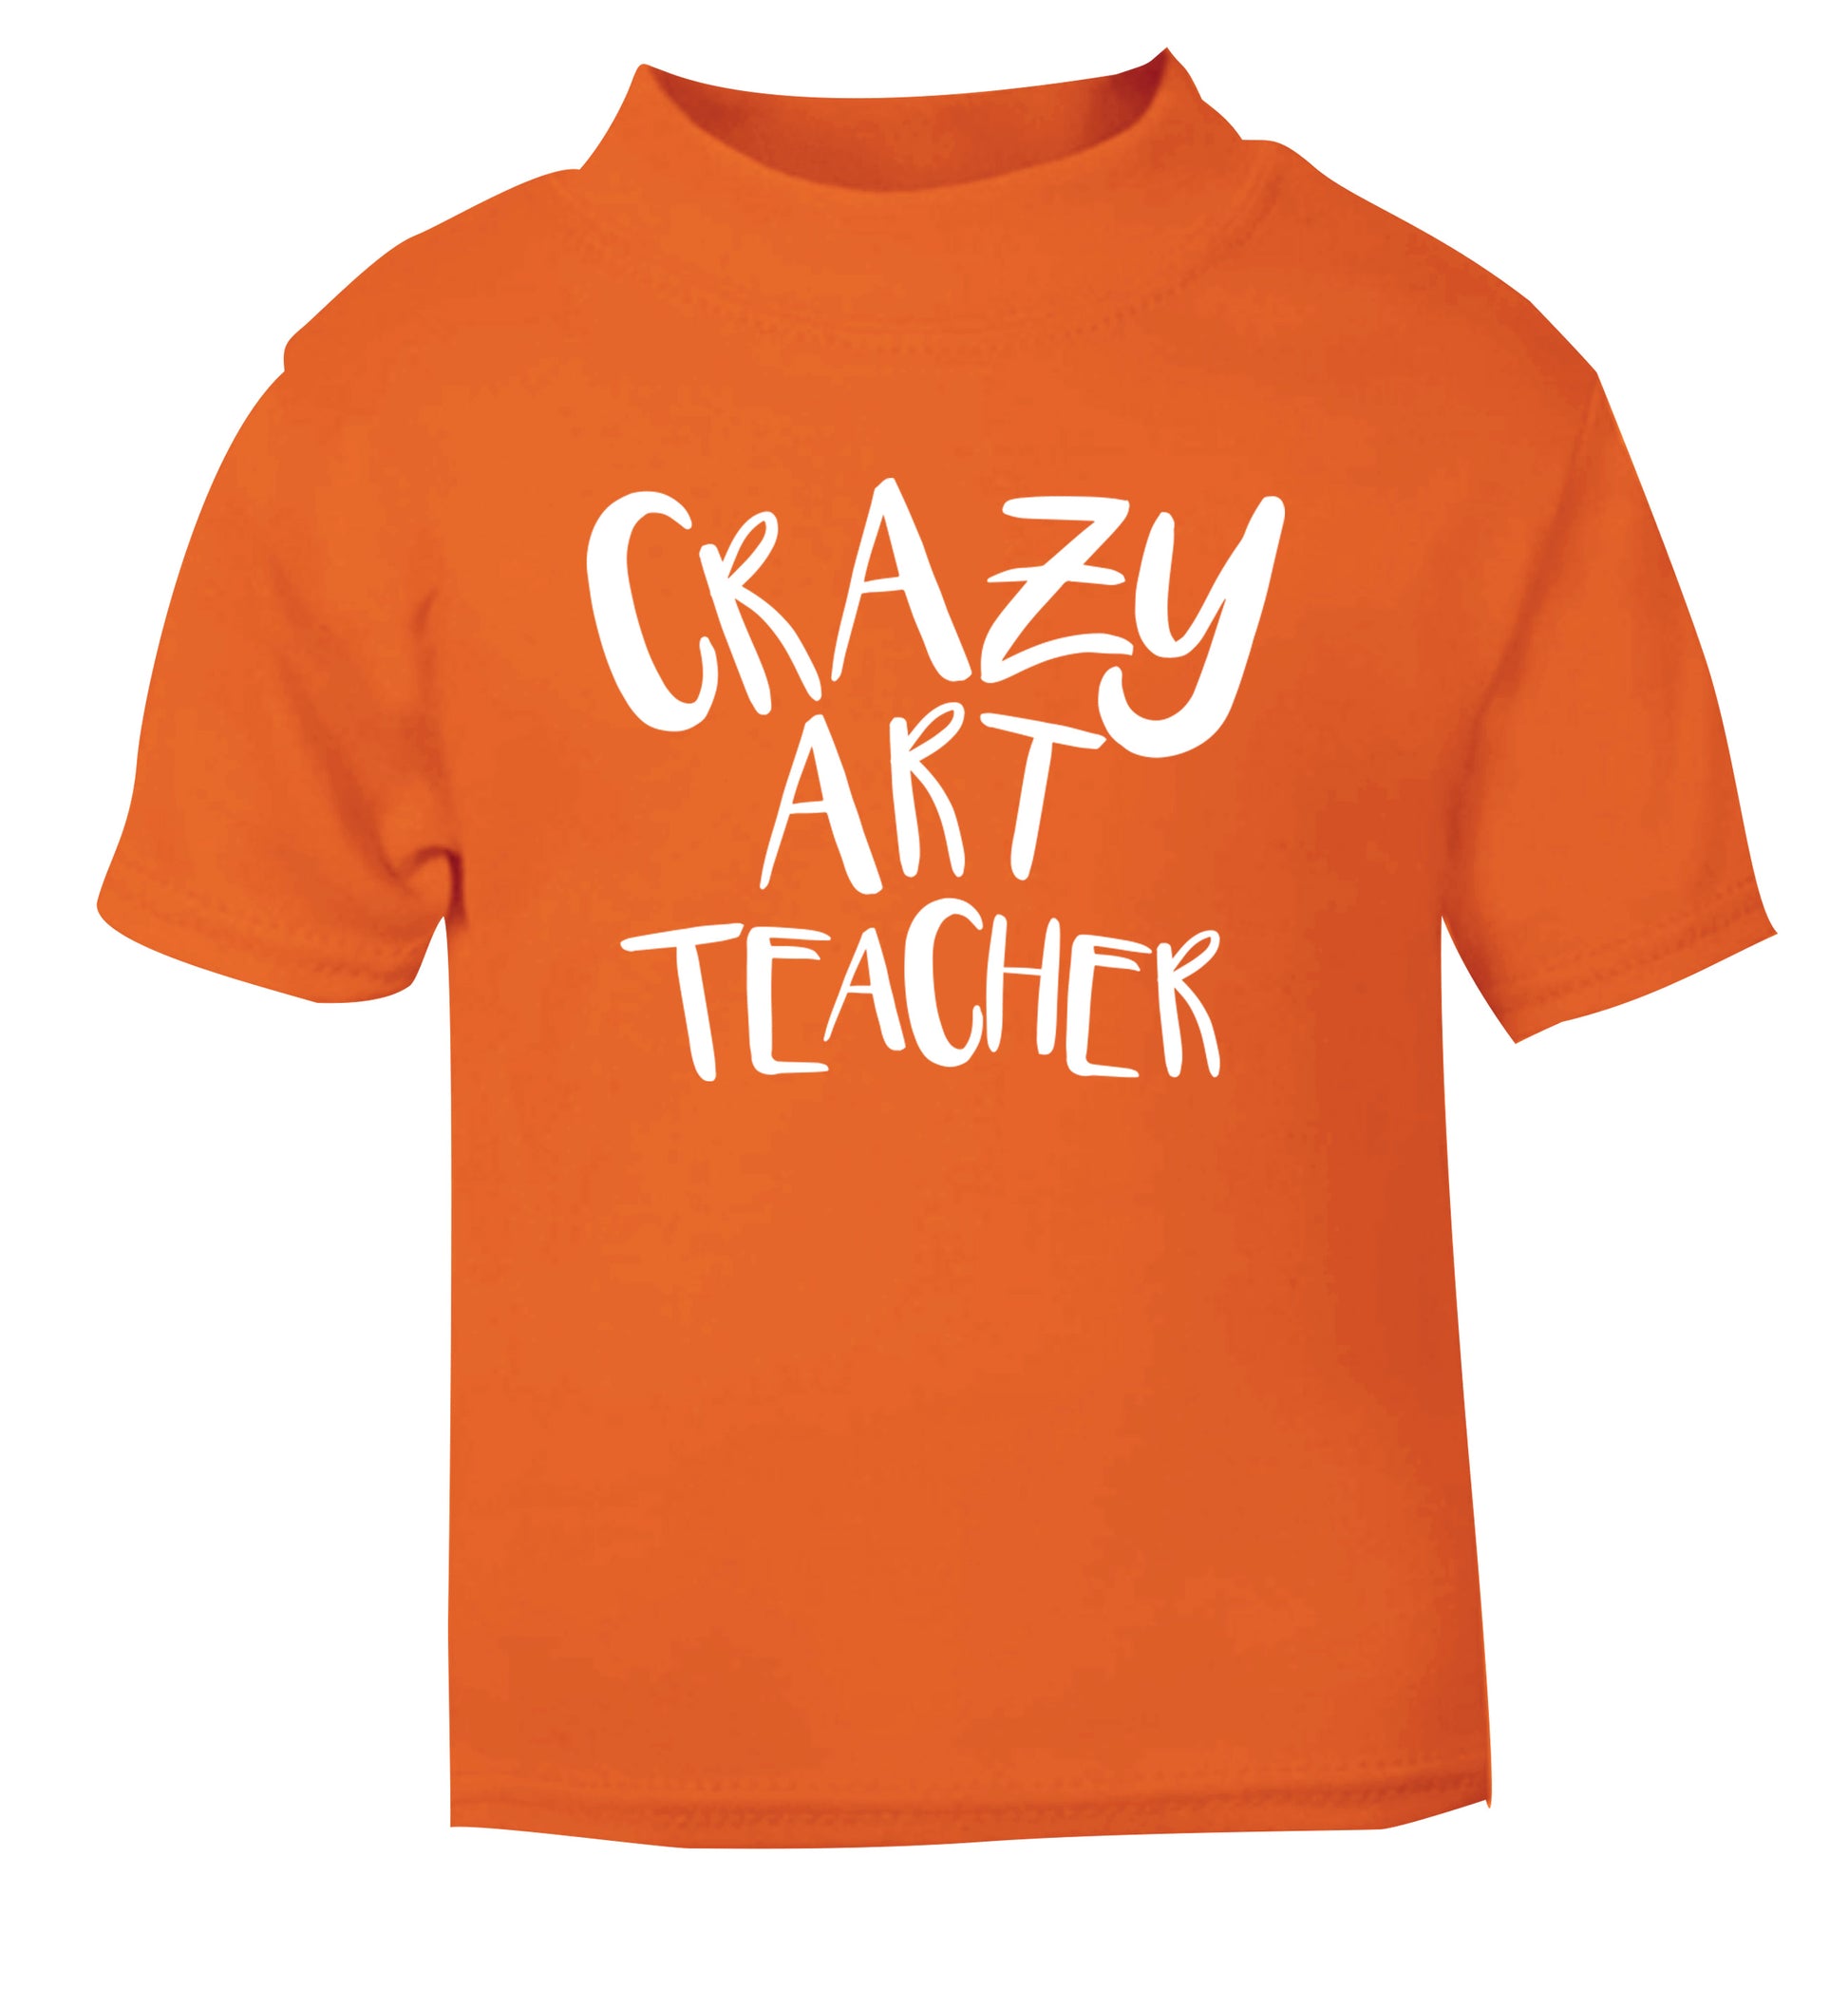 Crazy art teacher orange Baby Toddler Tshirt 2 Years